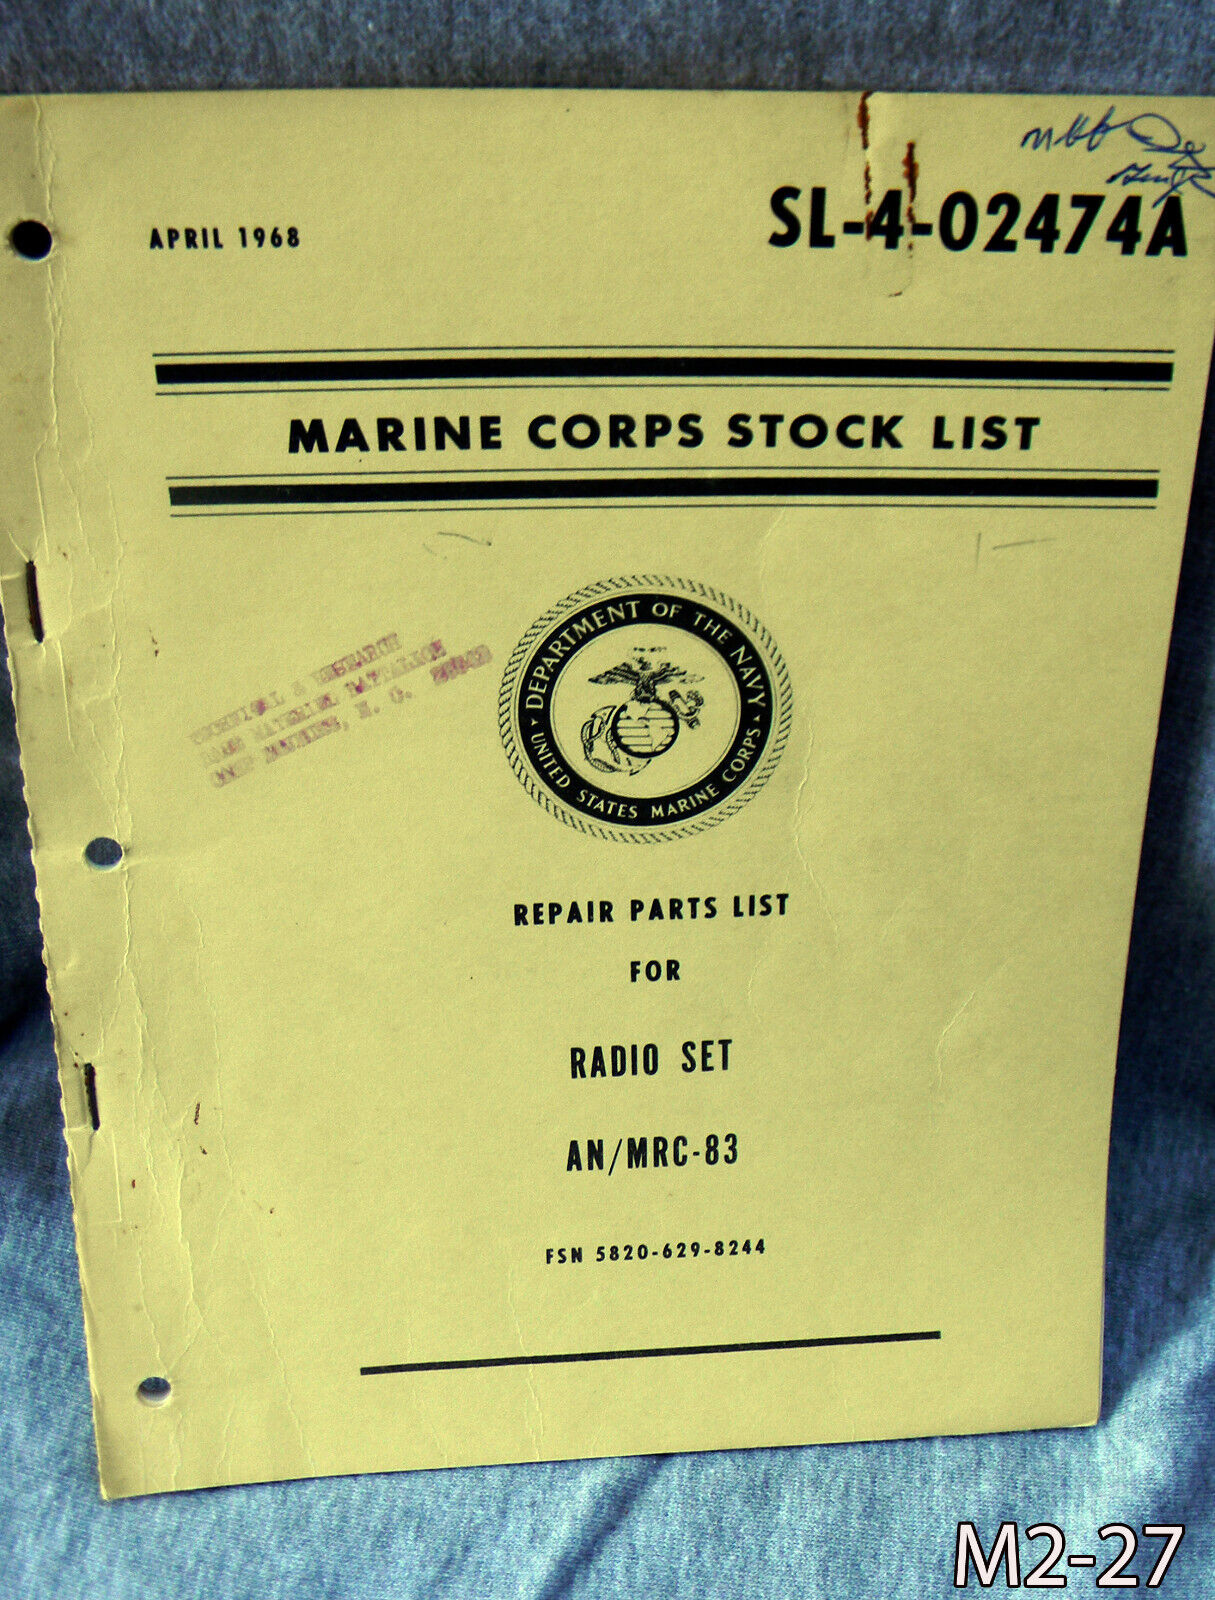 1968 REPAIR PARTS LIST for RADIO SET AN/MRC-83 SL-4-02474A MARINE CORPS STOCK